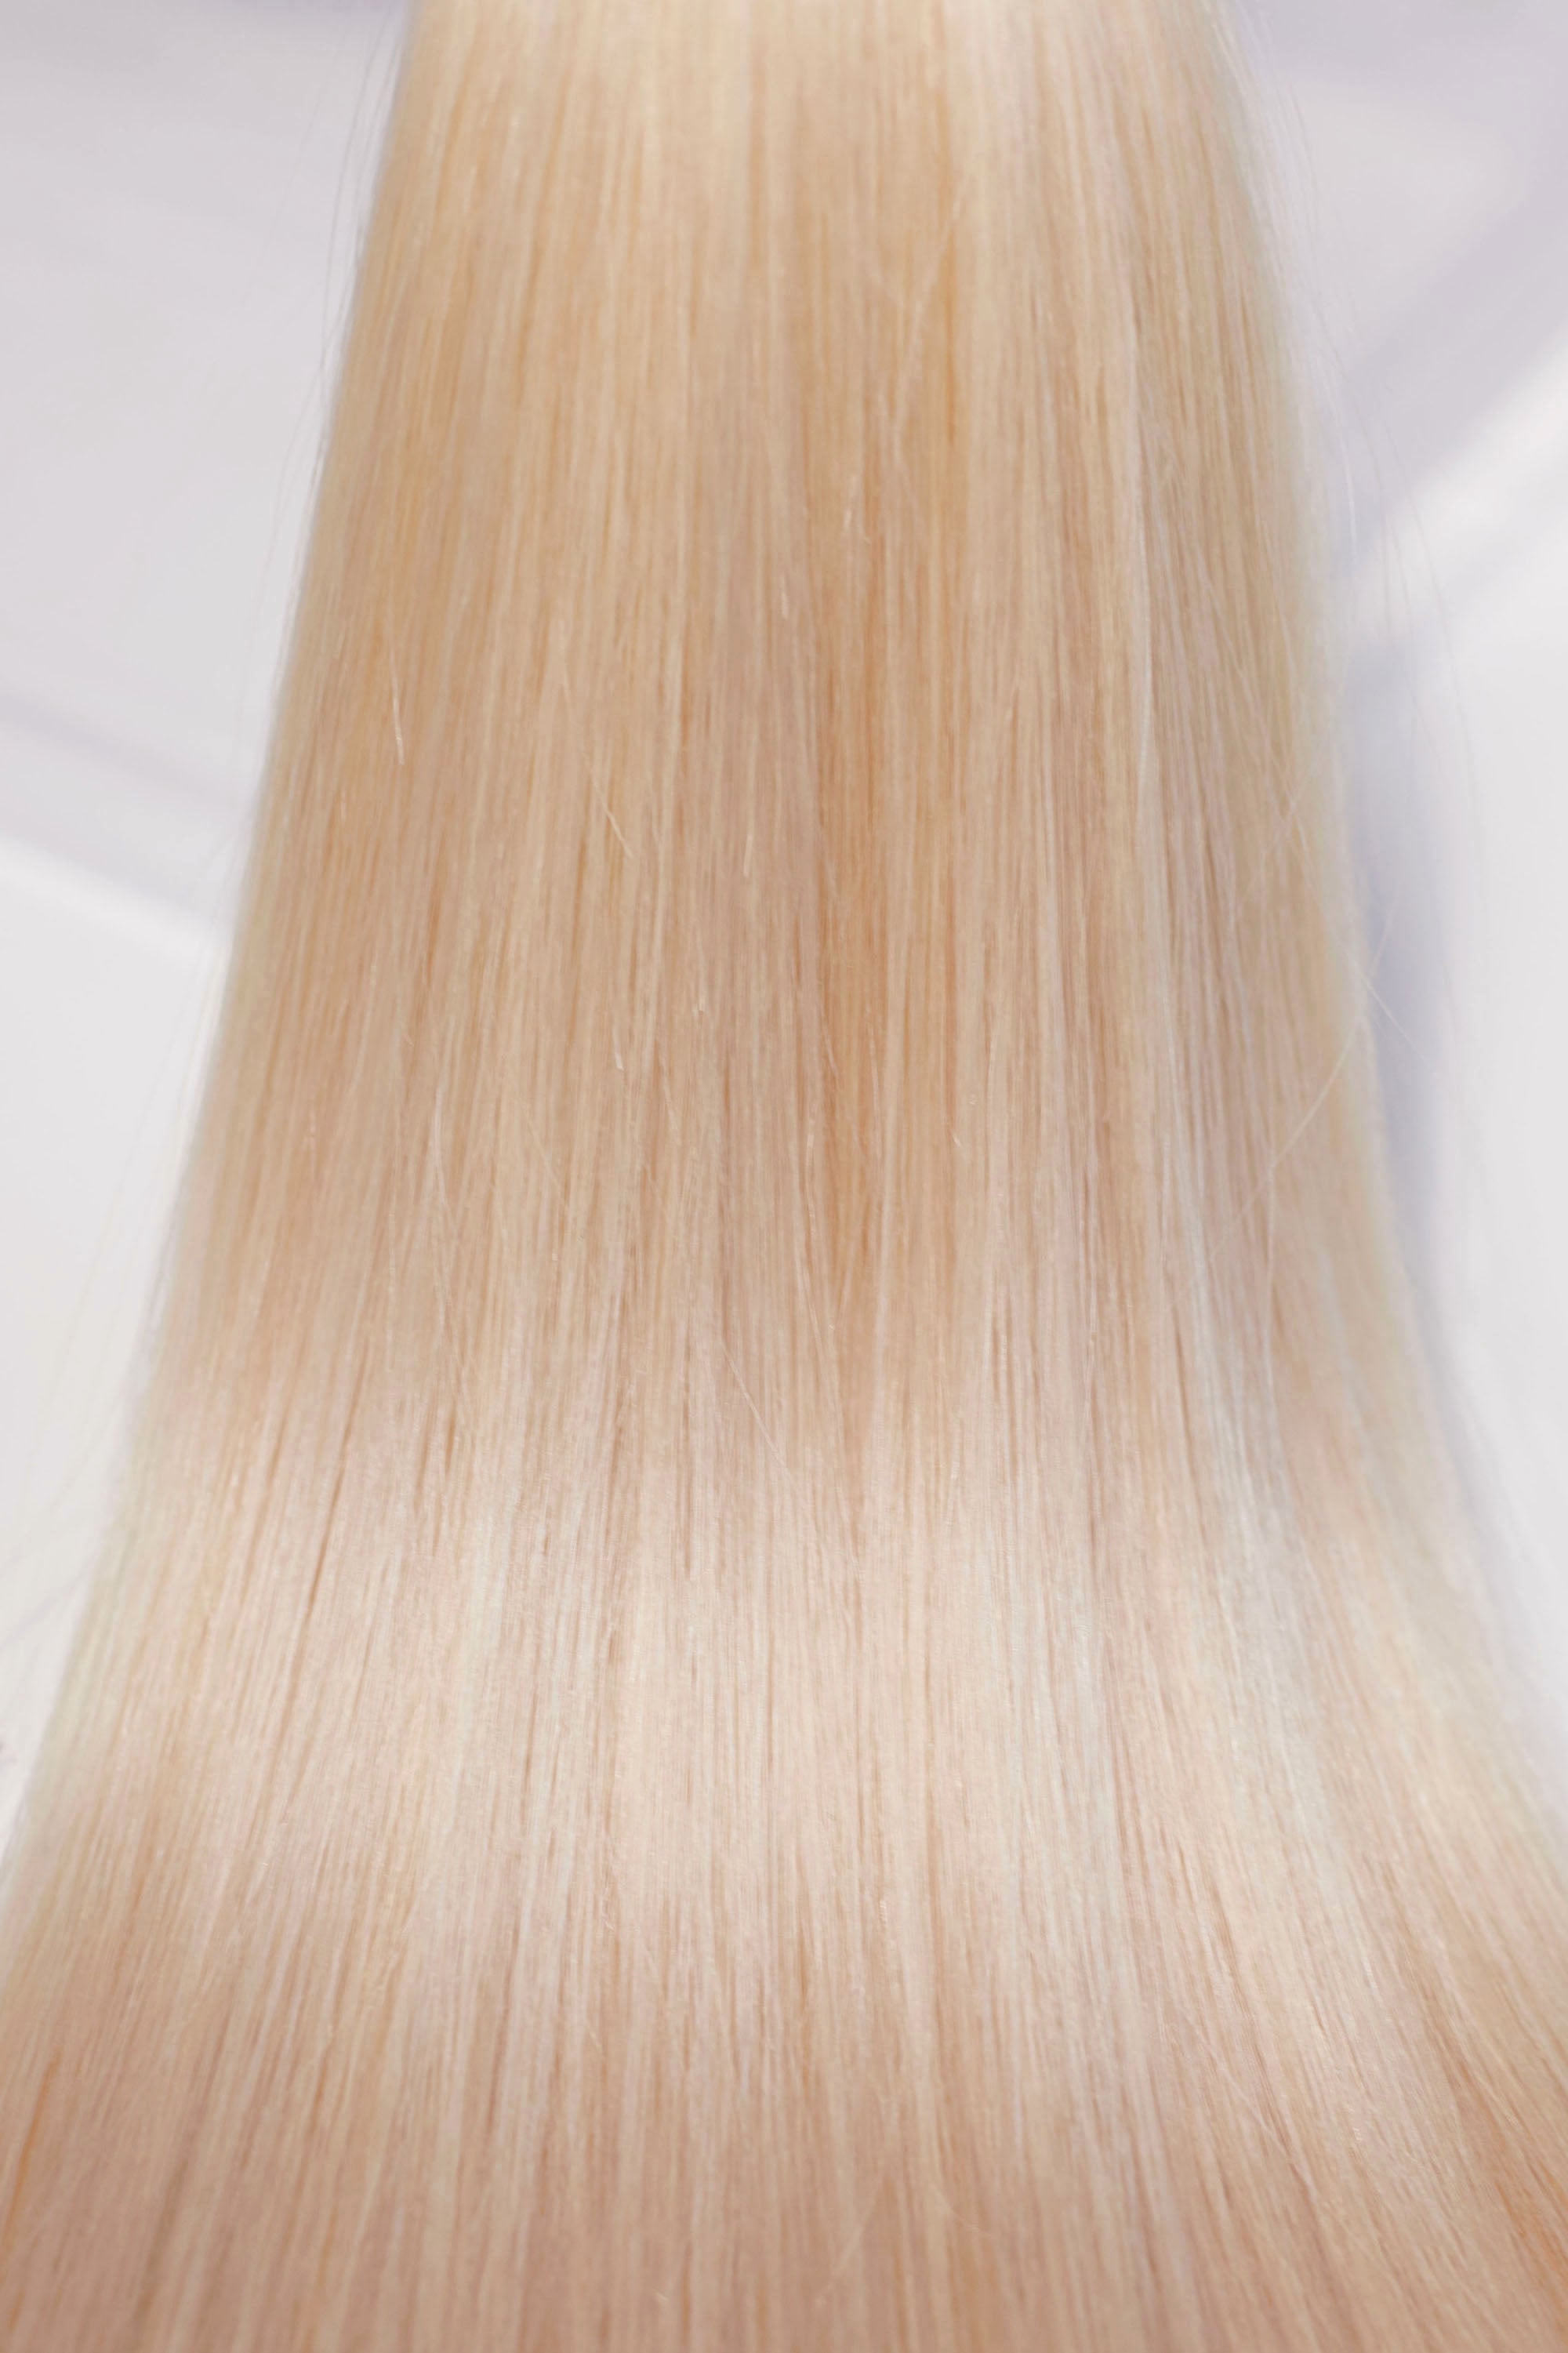 Behair professional Keratin Tip "Premium" 24" (60cm) Natural Straight Platinum Blond #60 - 25g (Micro - 0.5g each pcs) hair extensions